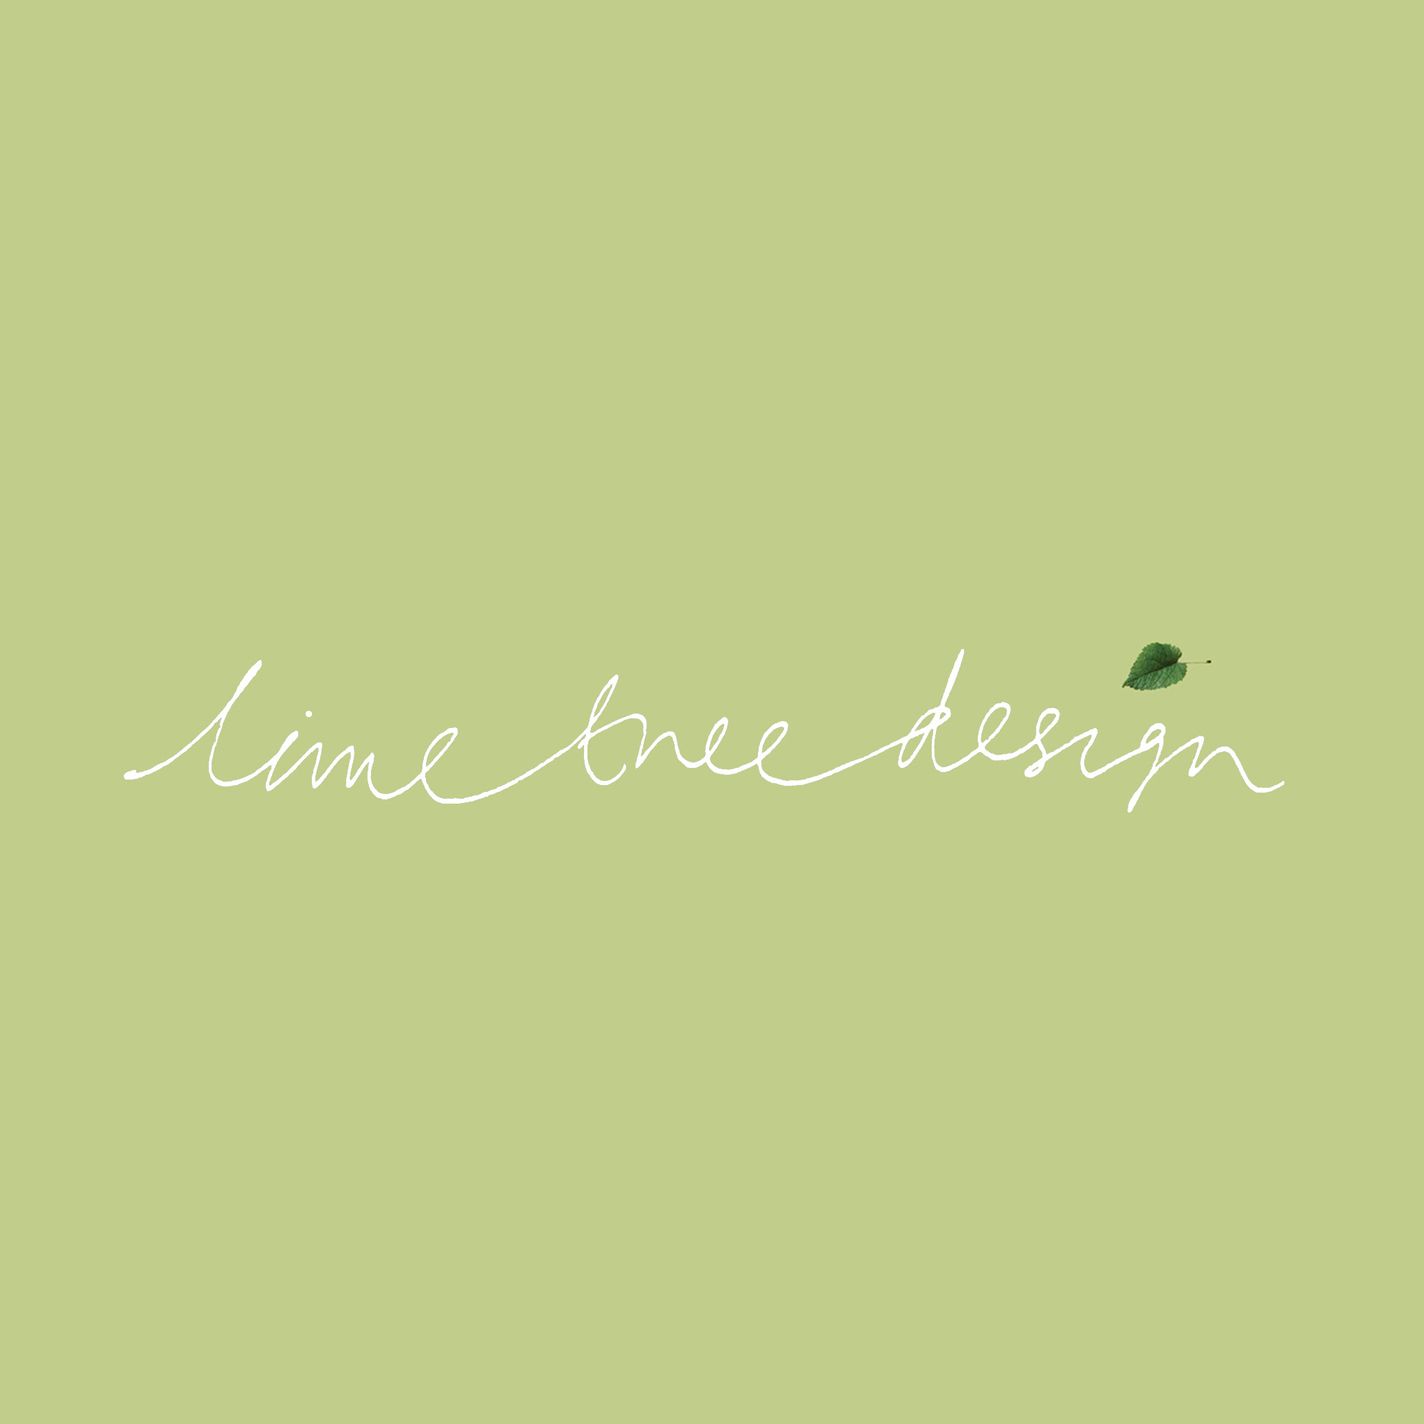 Lime Tree Design